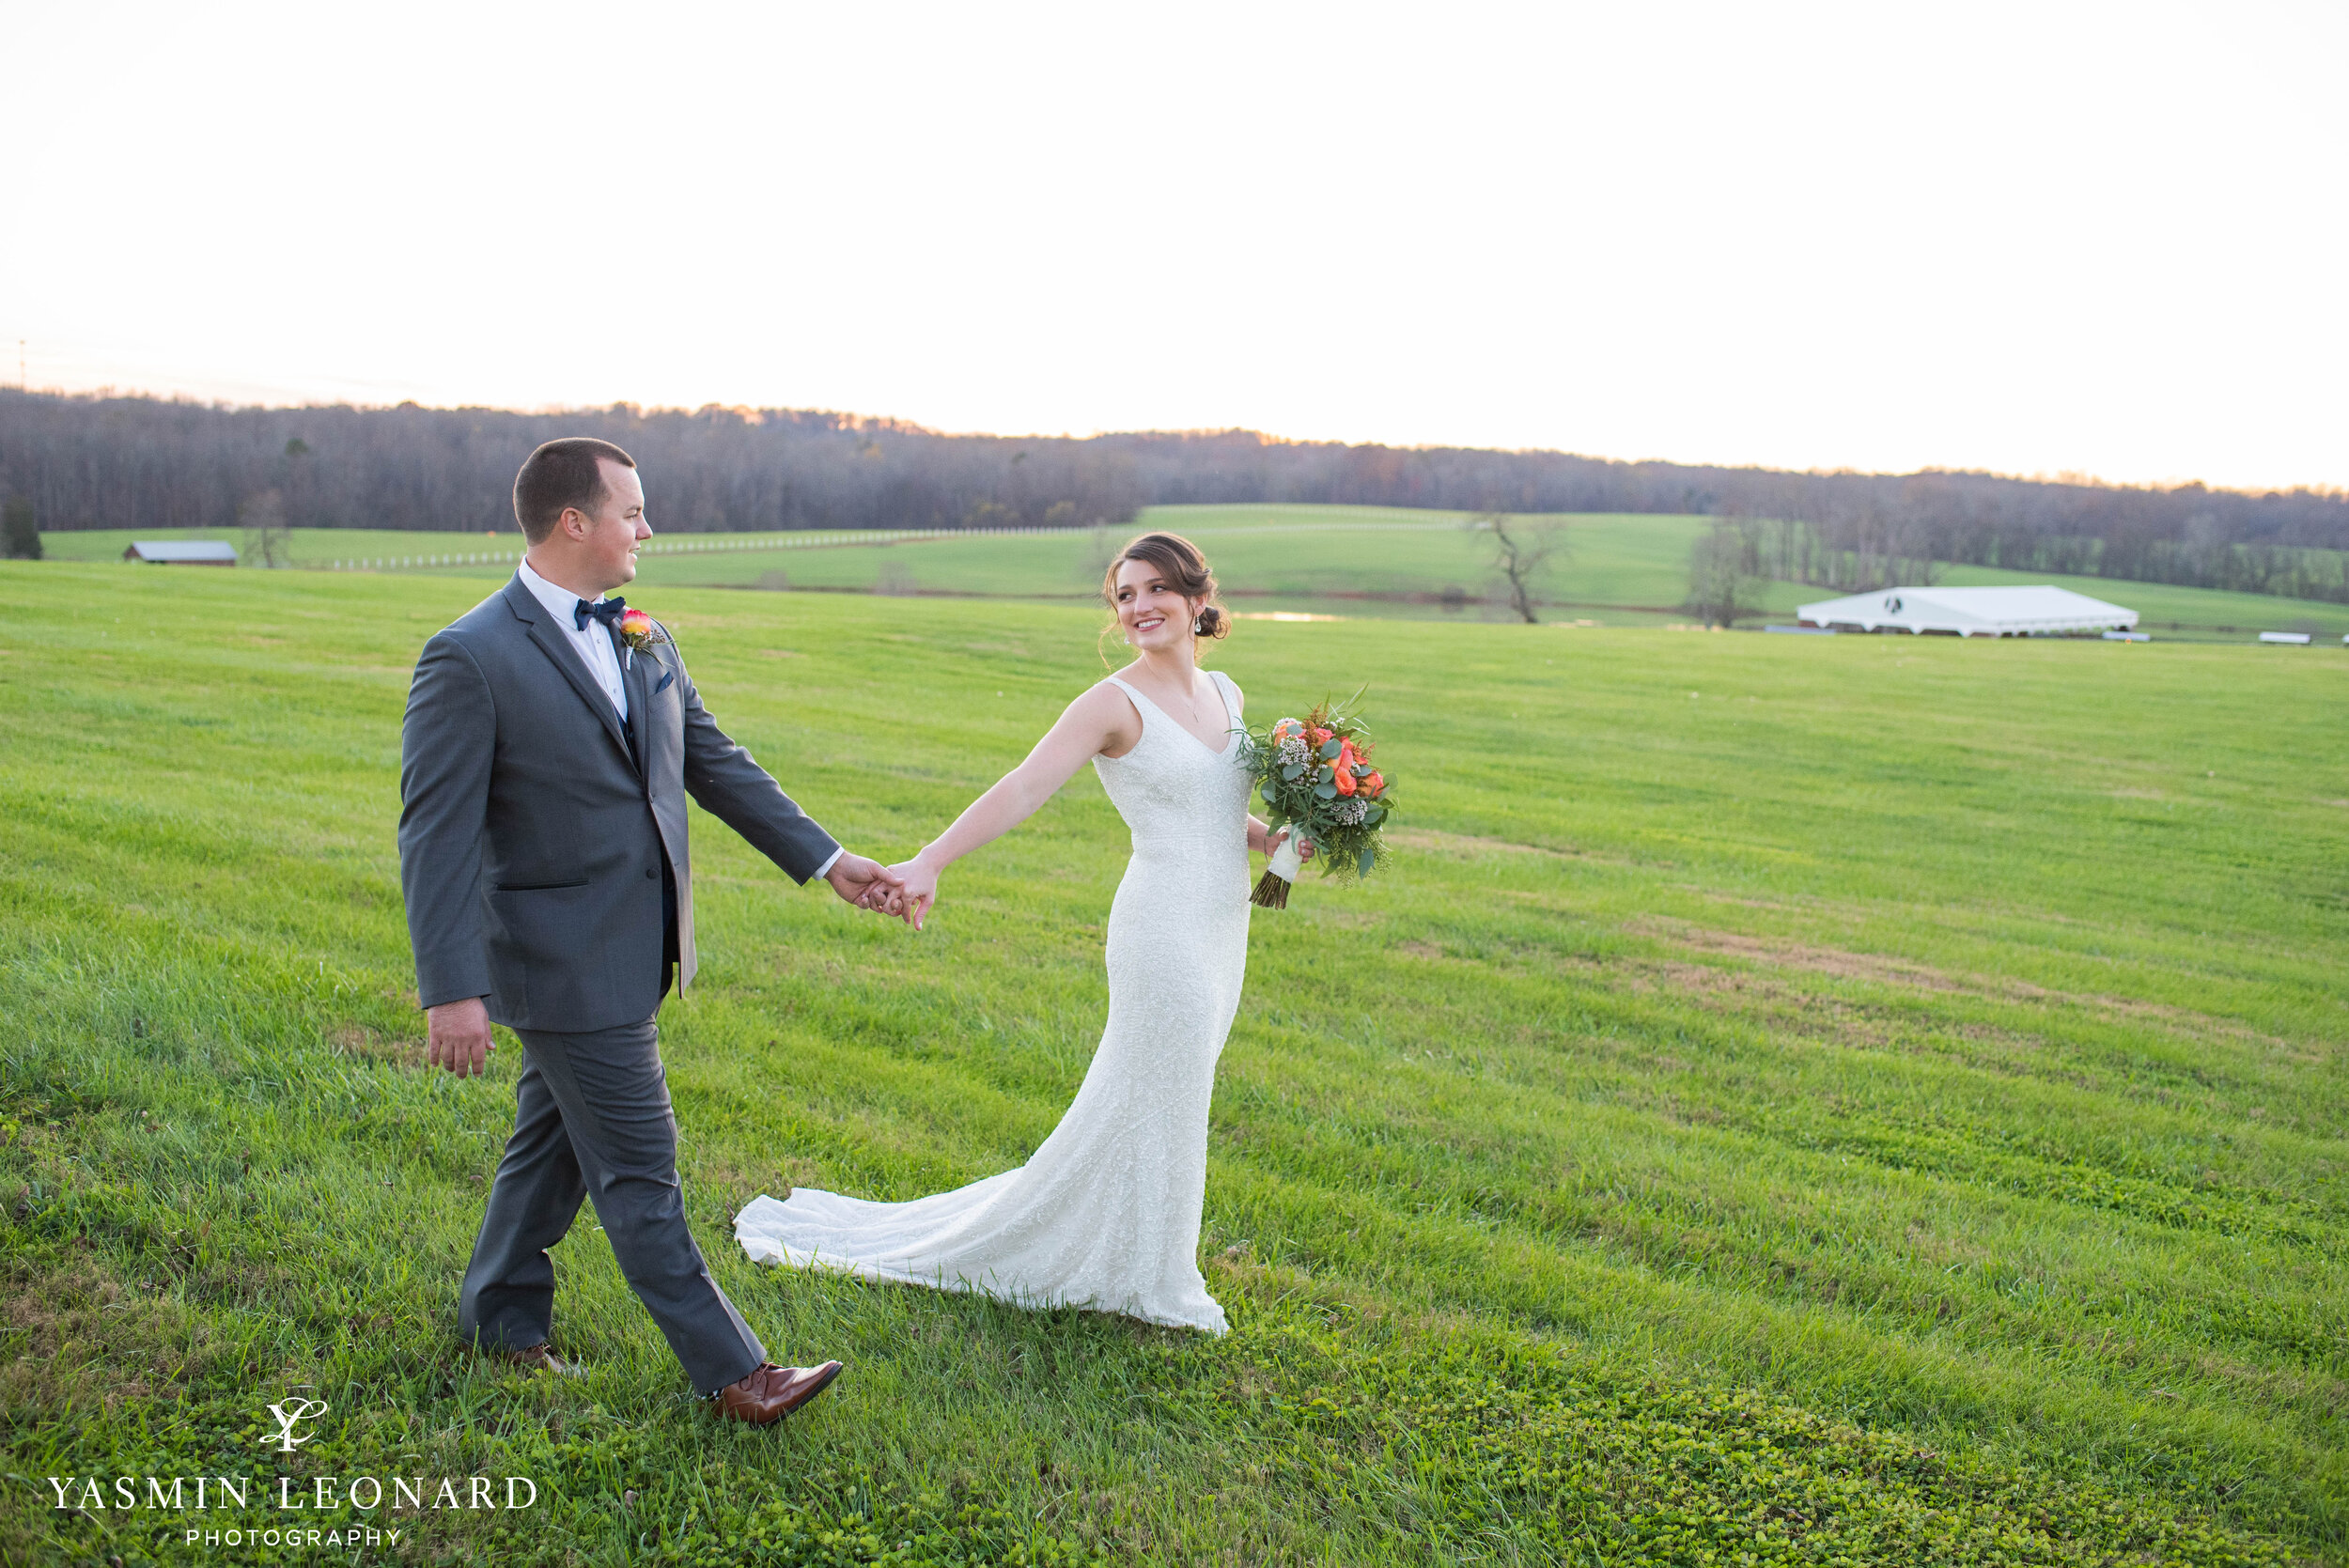 Jared and Katy - Adaumont Farms - High Point Weddings - NC Barn Weddings - Yasmin Leonard Photography-49.jpg